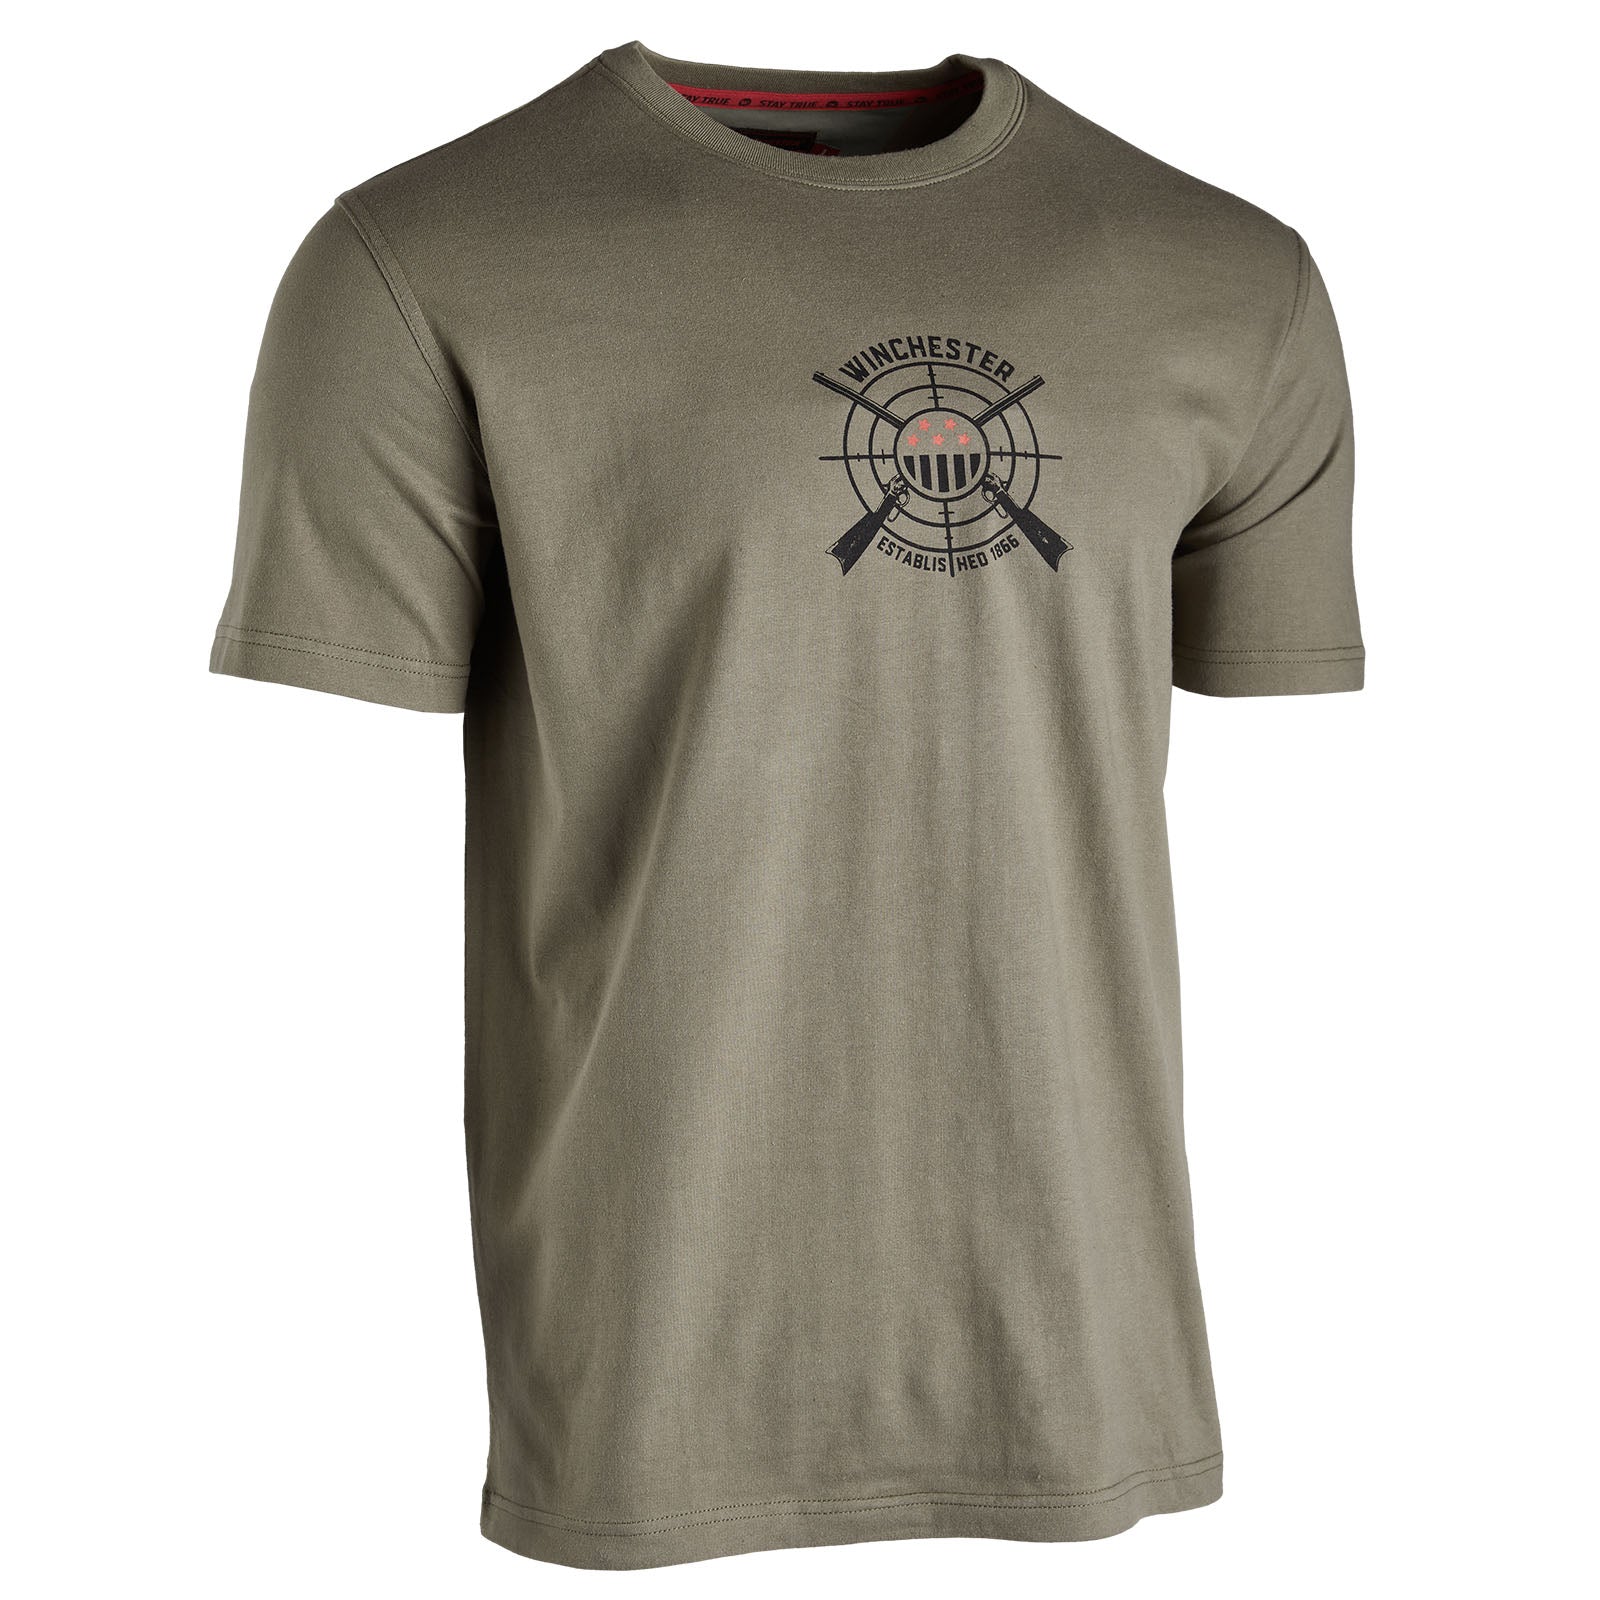 Winchester Parlin T-Shirt - Khaki